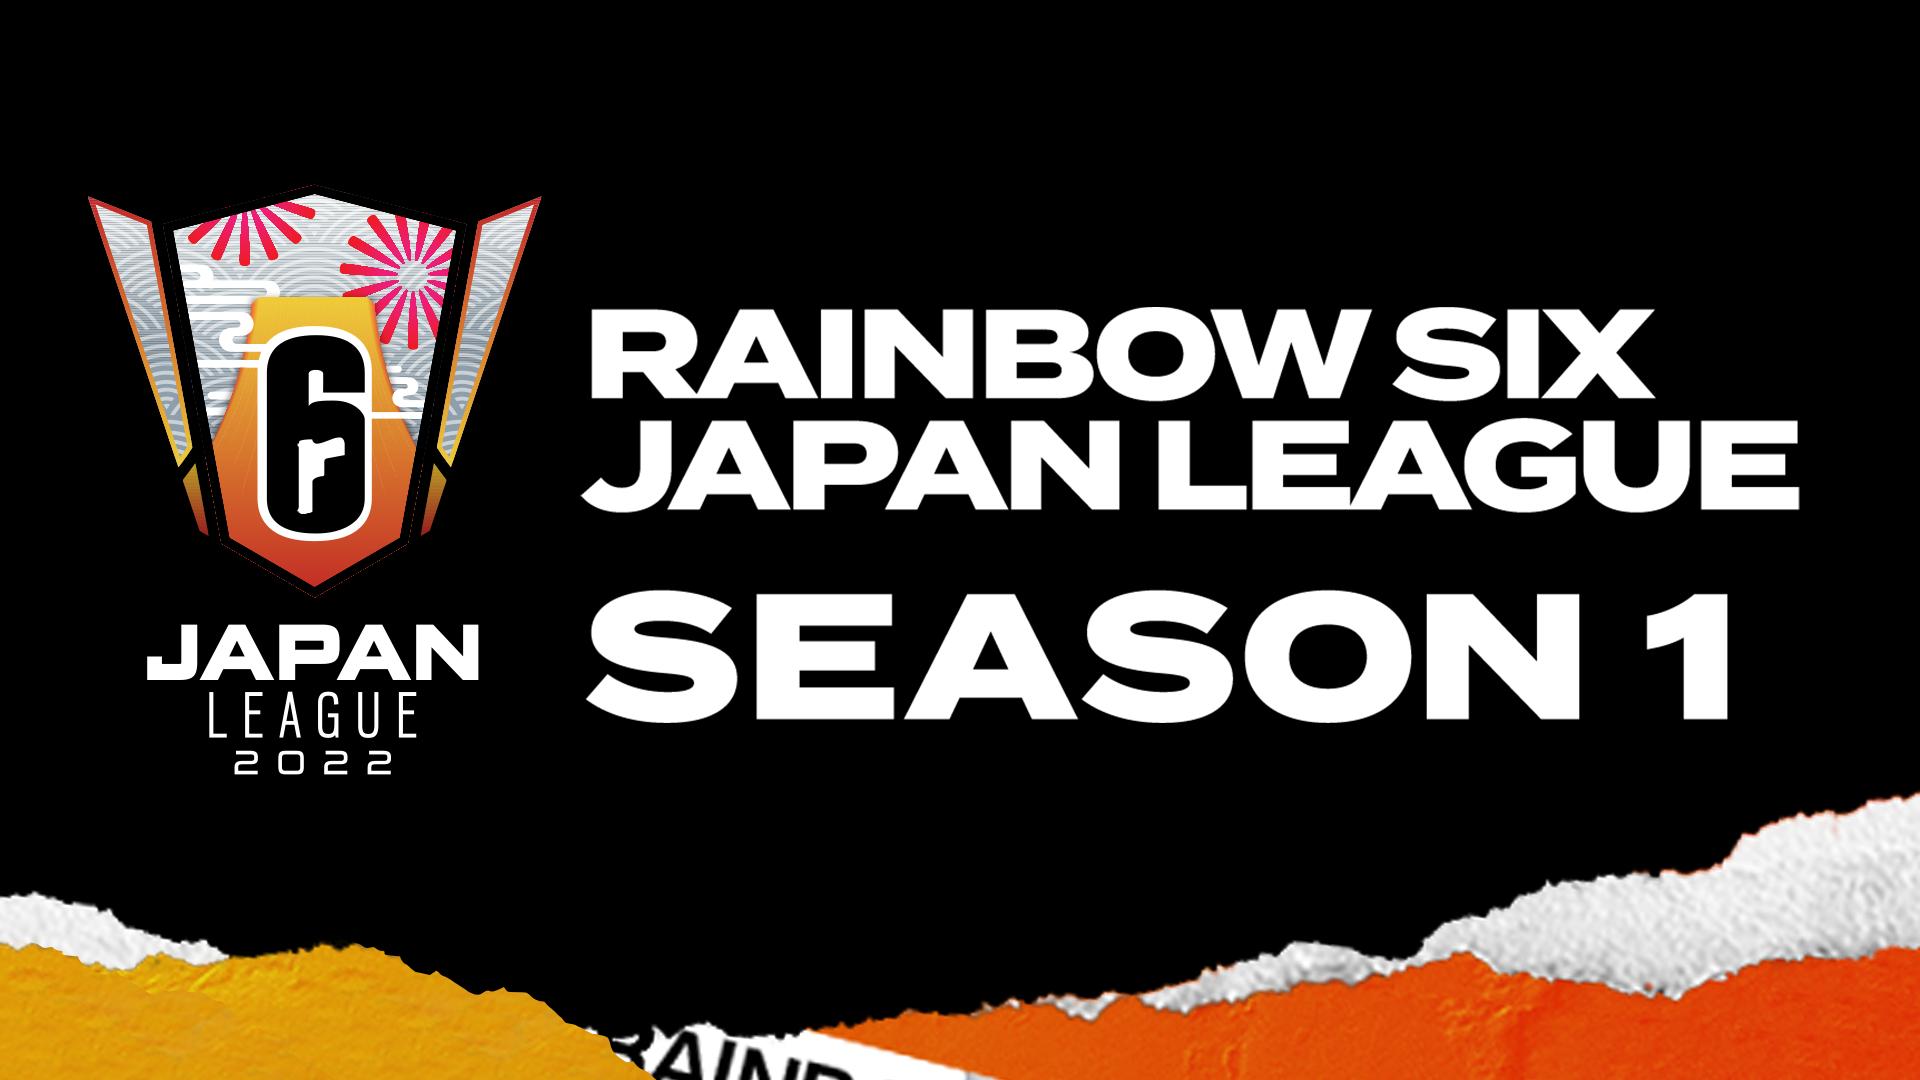 Rainbow Six Japan League 2022 Season 1 feature image